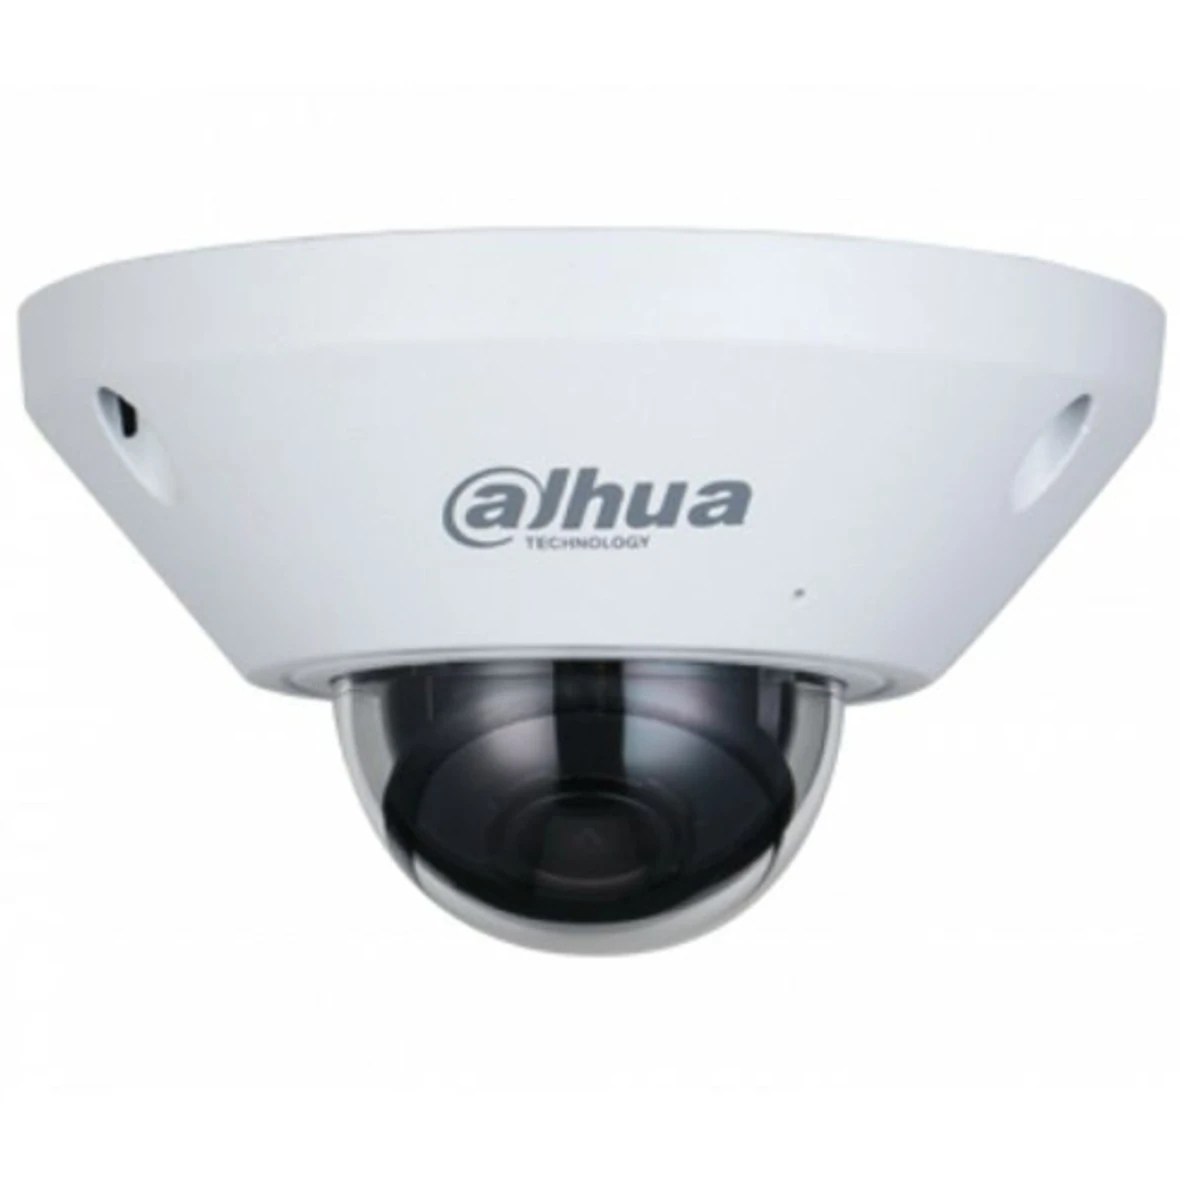 Dahua DH-IPC-EB5541-AS 5MP IP Fisheye Camera